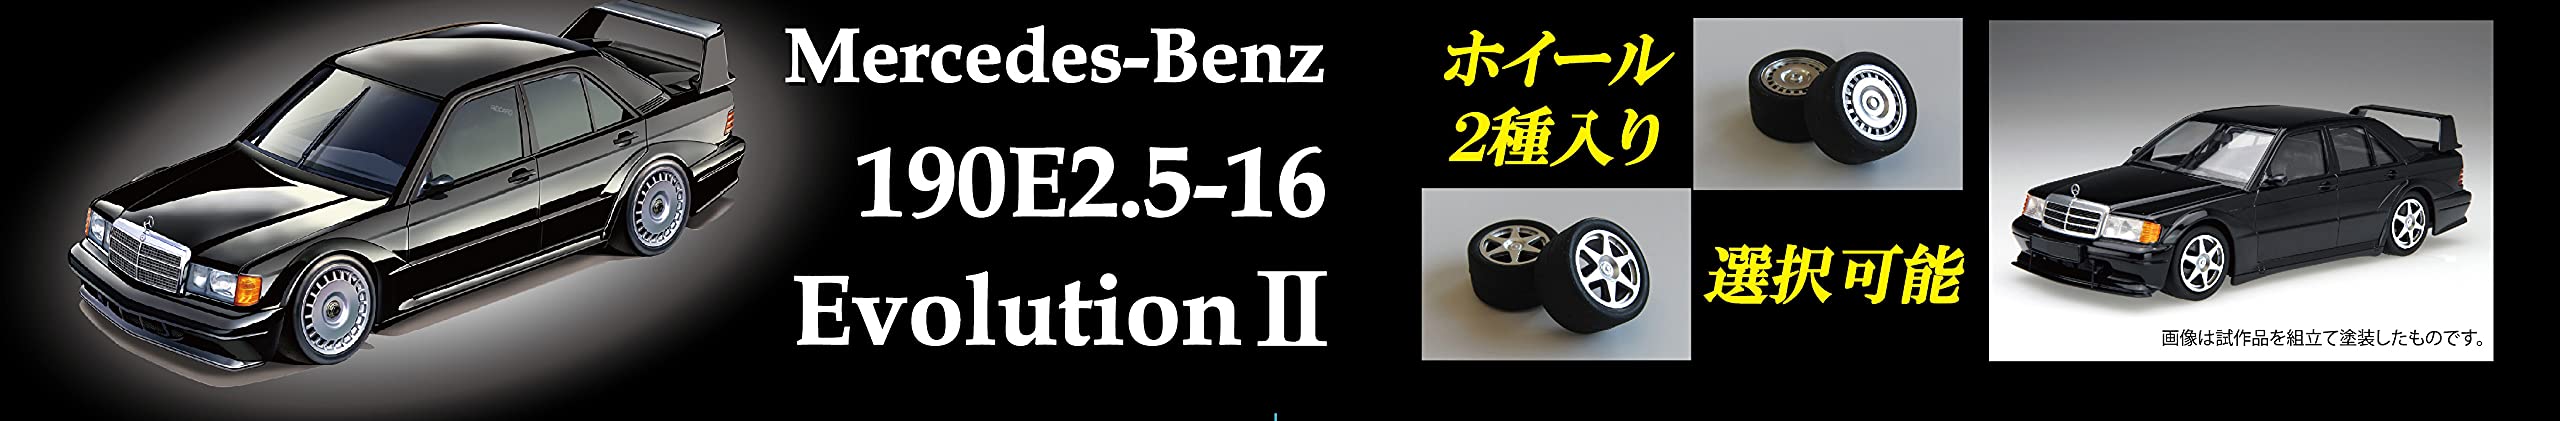 FUJIMI Real Sports Car 1/24 Mercedes-Benz 190E2.5-16 Evolution Ll Kunststoffmodell